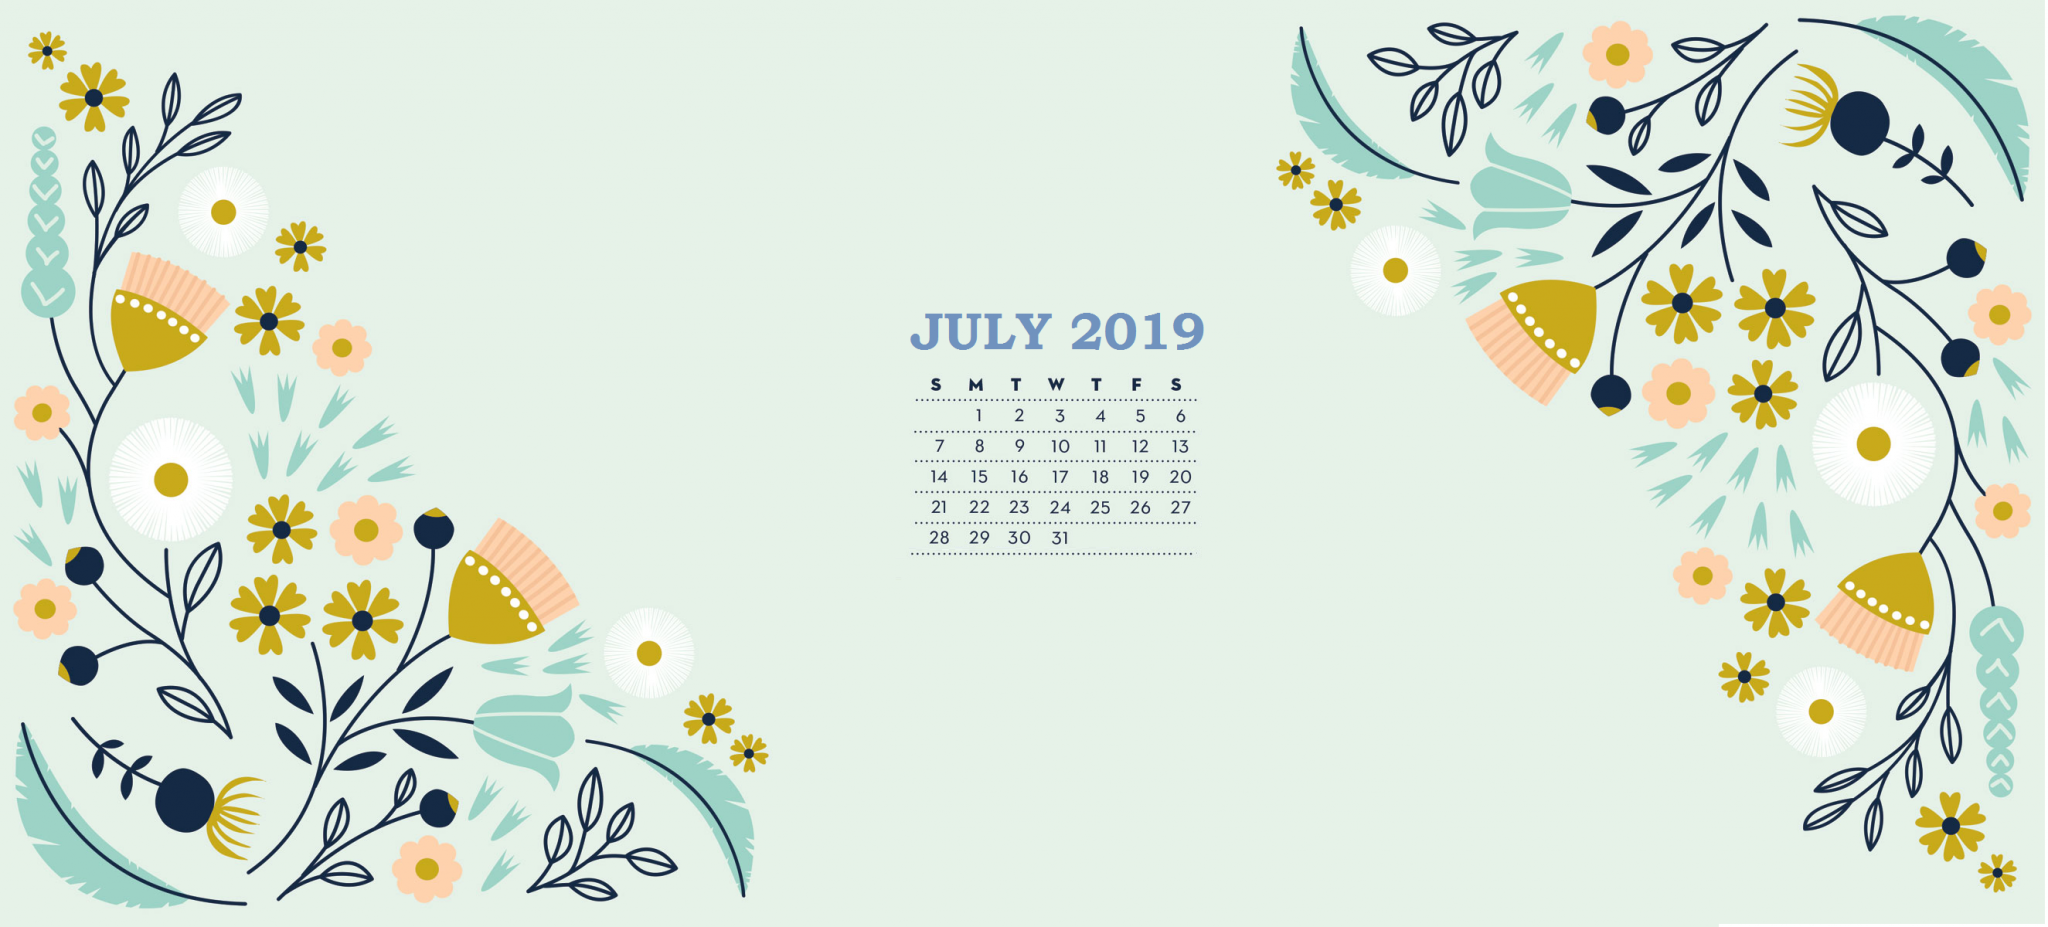 Cute July 2019 Calendar Wallpaper